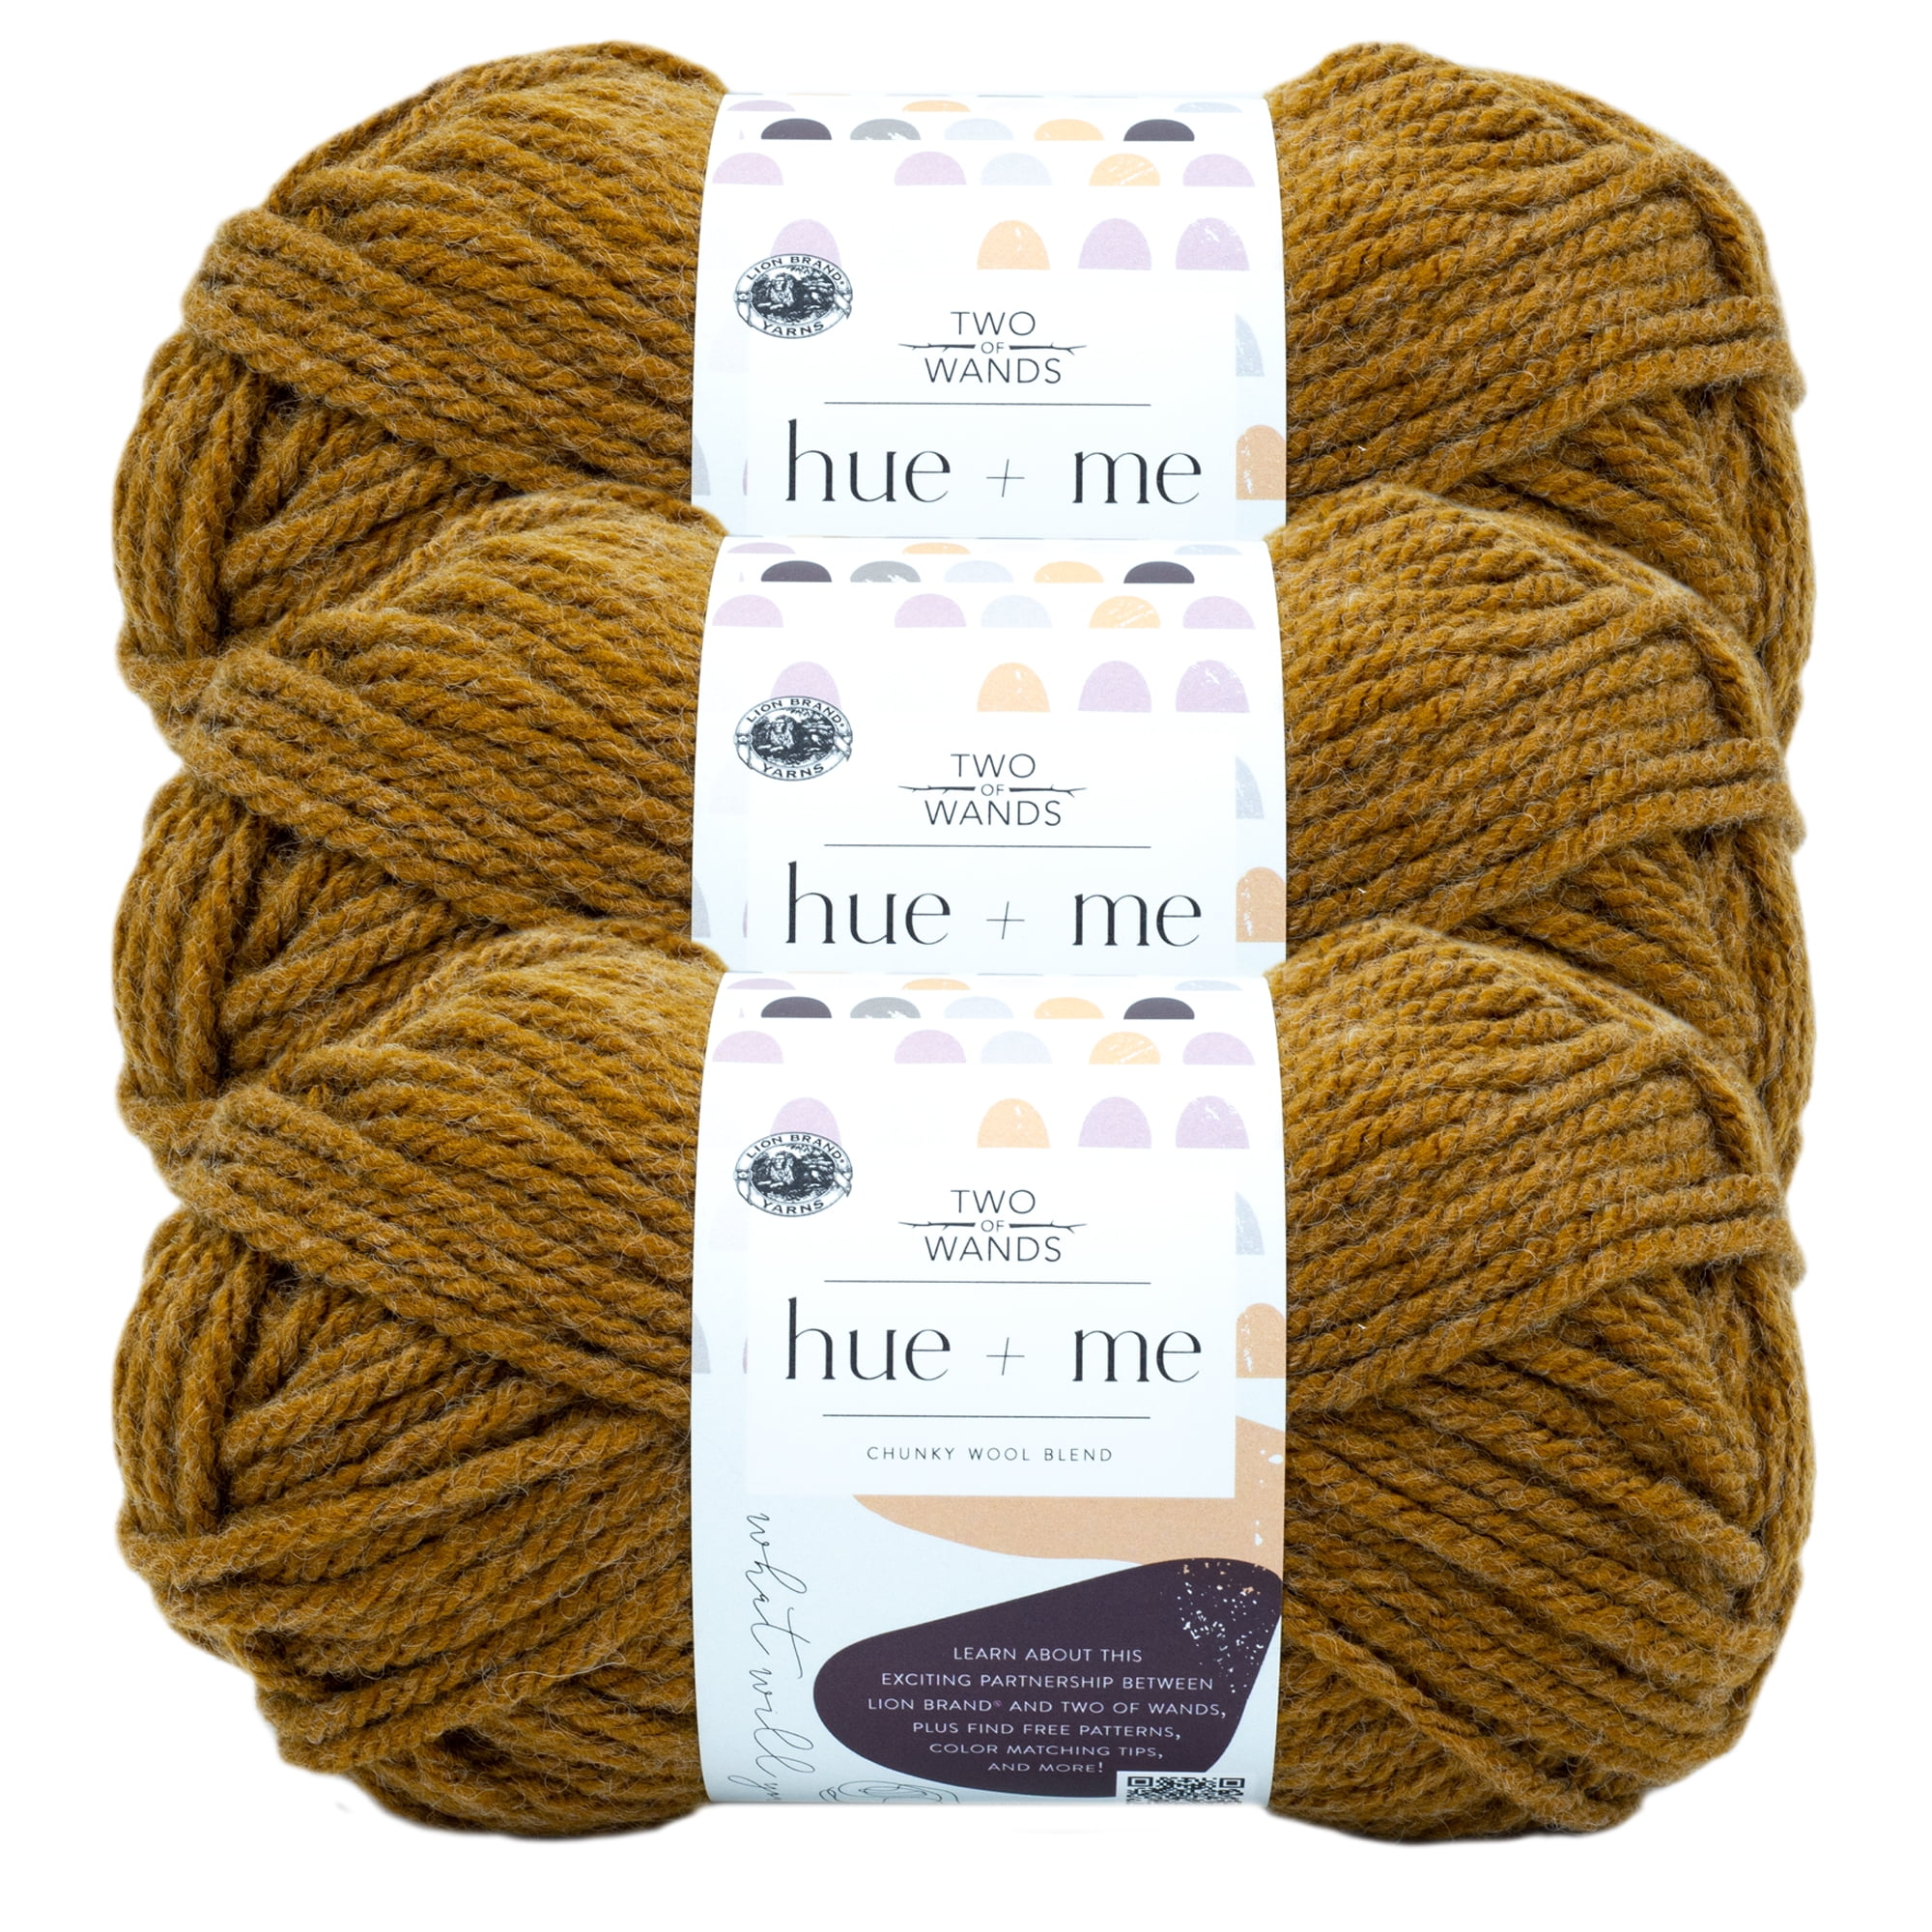 Lion Brand Yarn Two of Wands Hue + Me Grapefruit Wool Blend Acrylic, Wool  Orange Yarn 3 Pack 